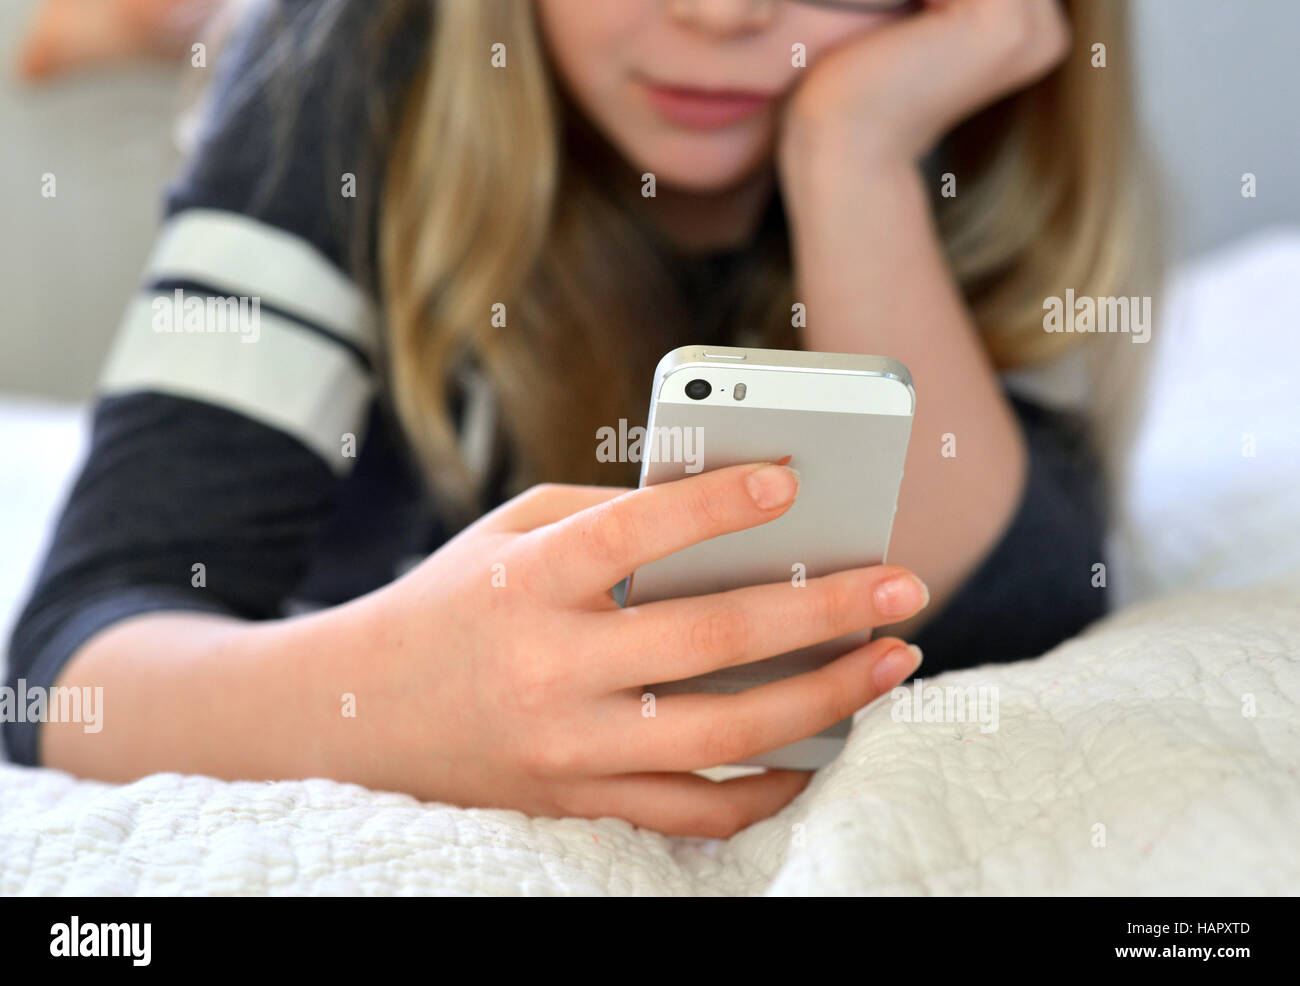 Teen / tween girl holding a mobile phone (iphone) Stock Photo